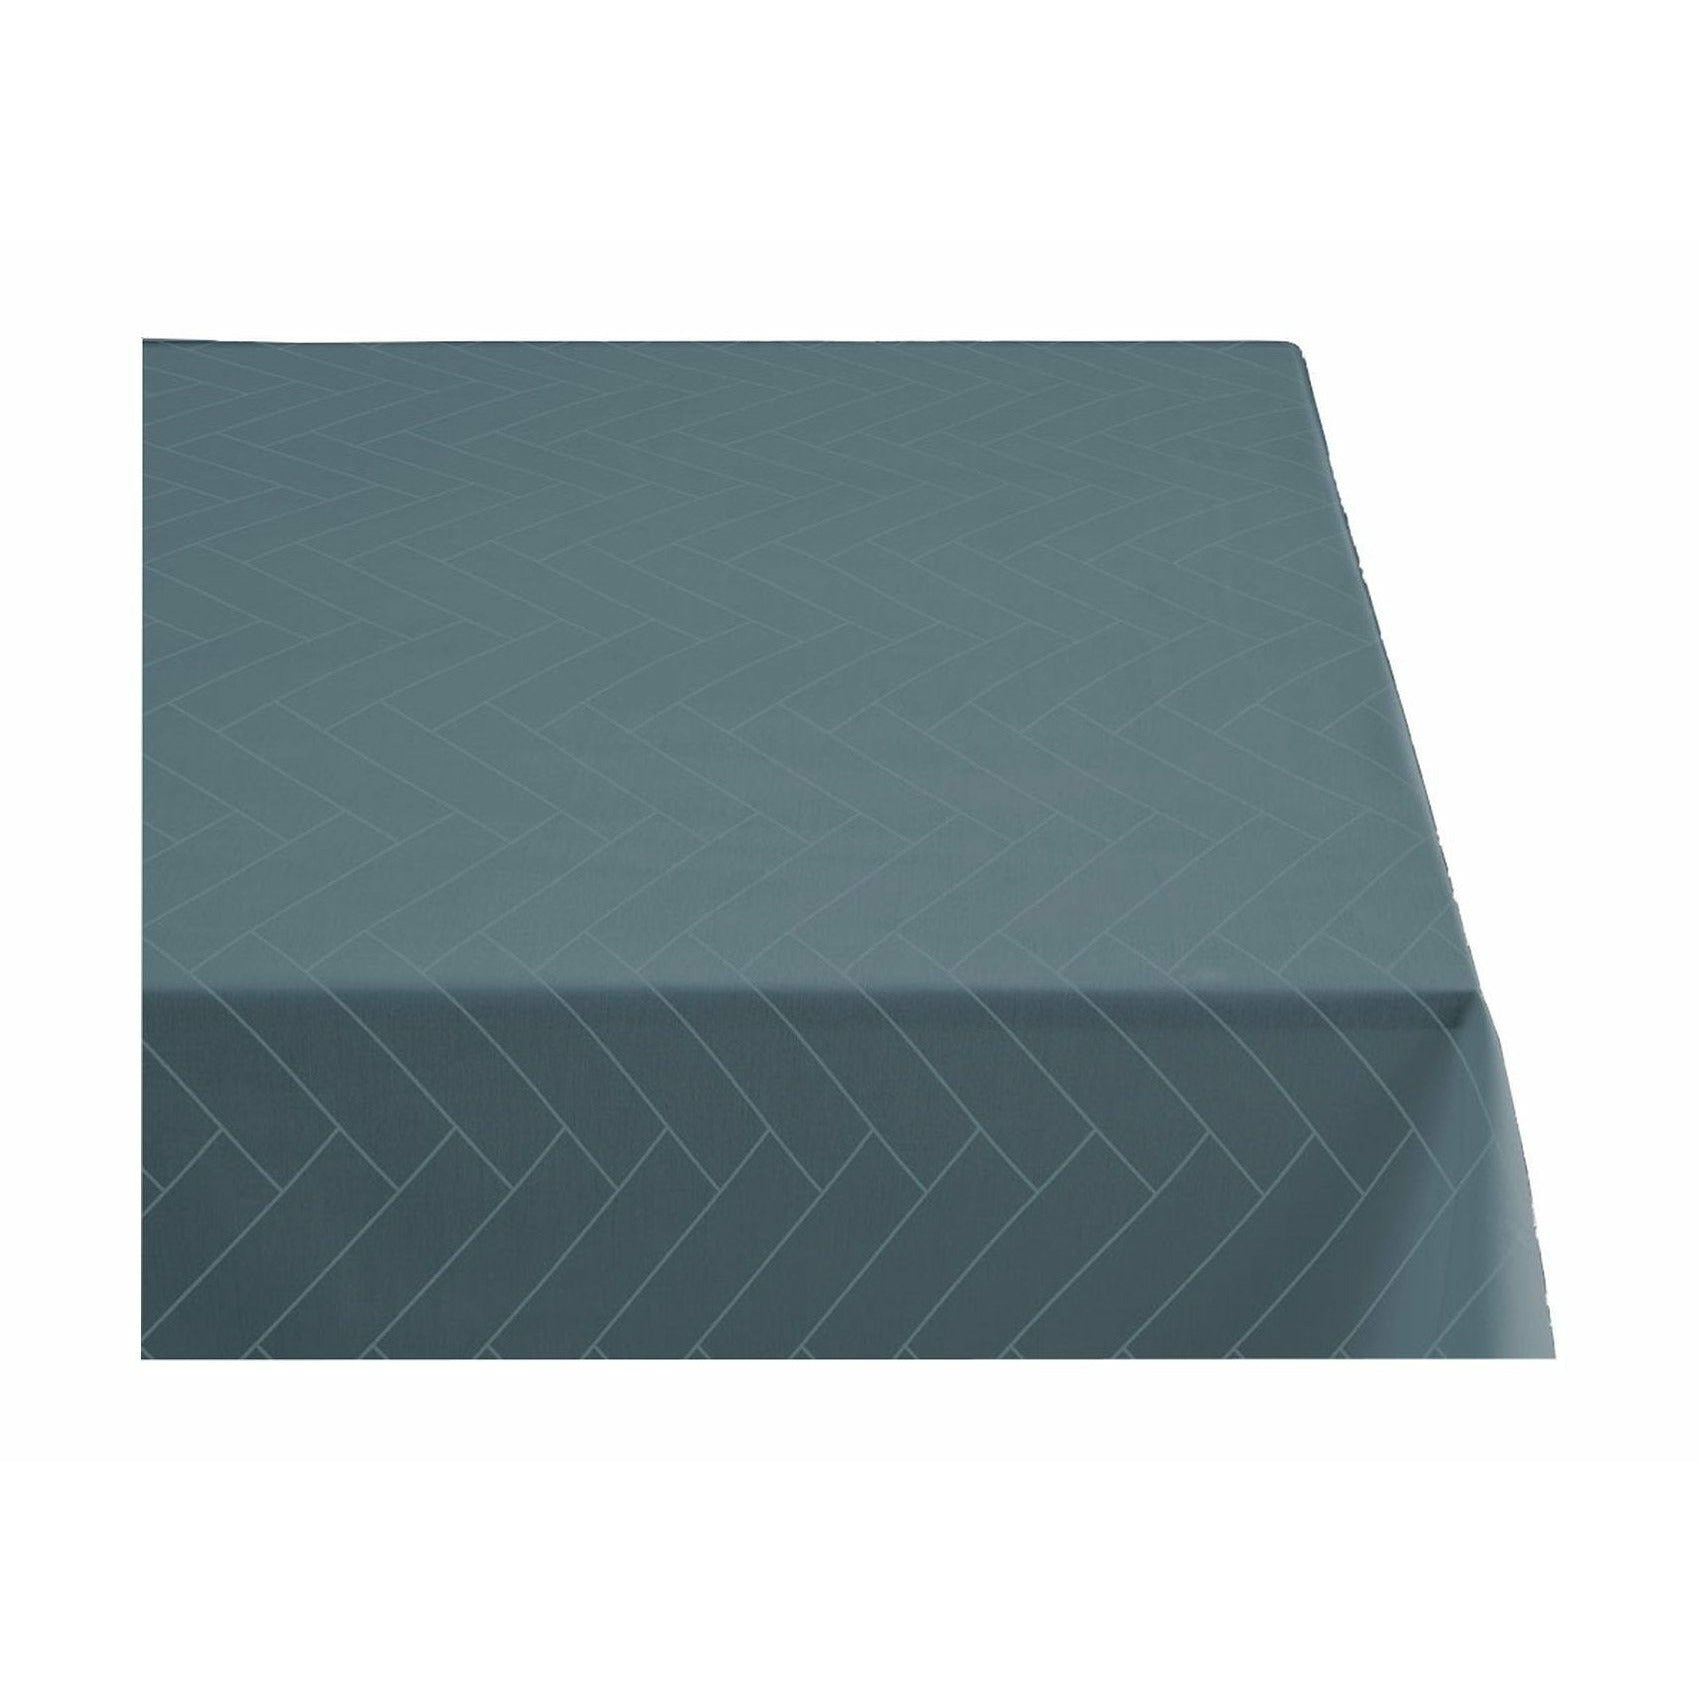 södahl瓷砖damask桌布Ø160厘米，大西洋